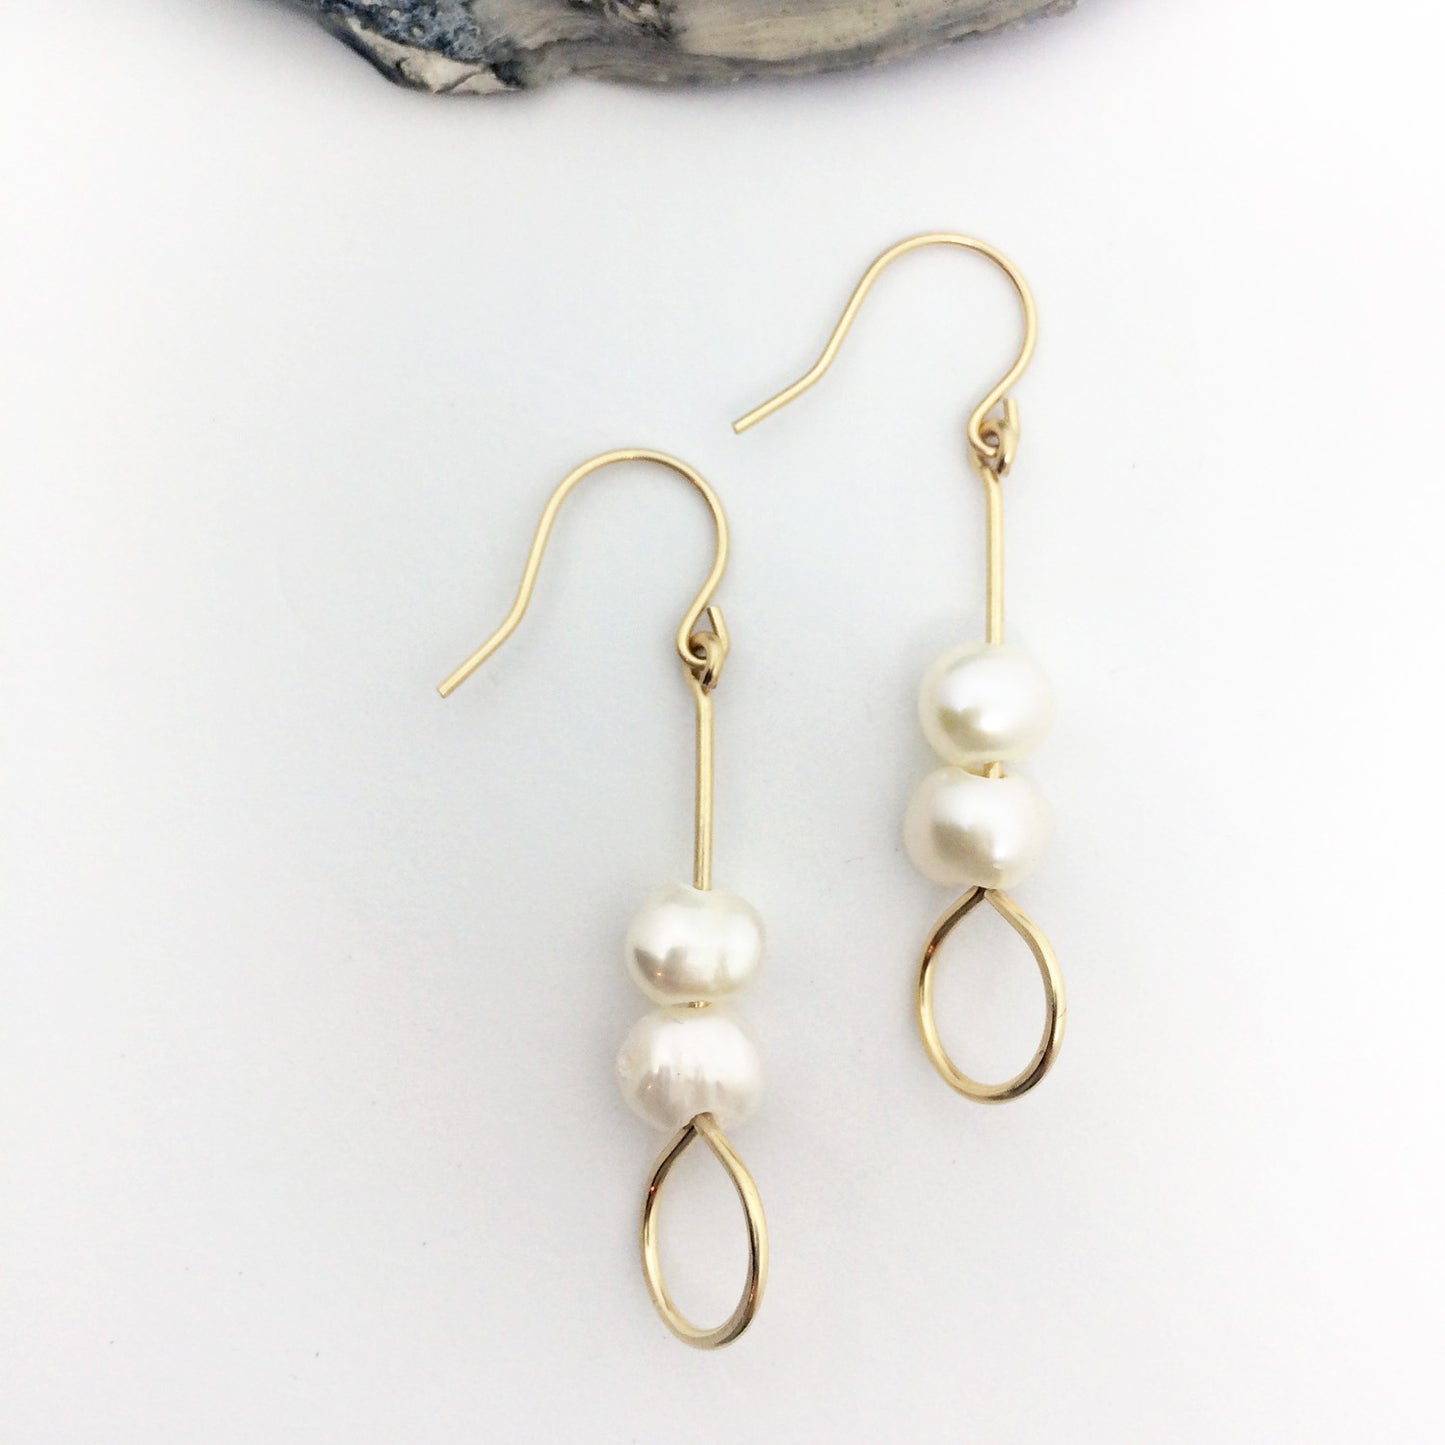 Freshwater Pearl Earring